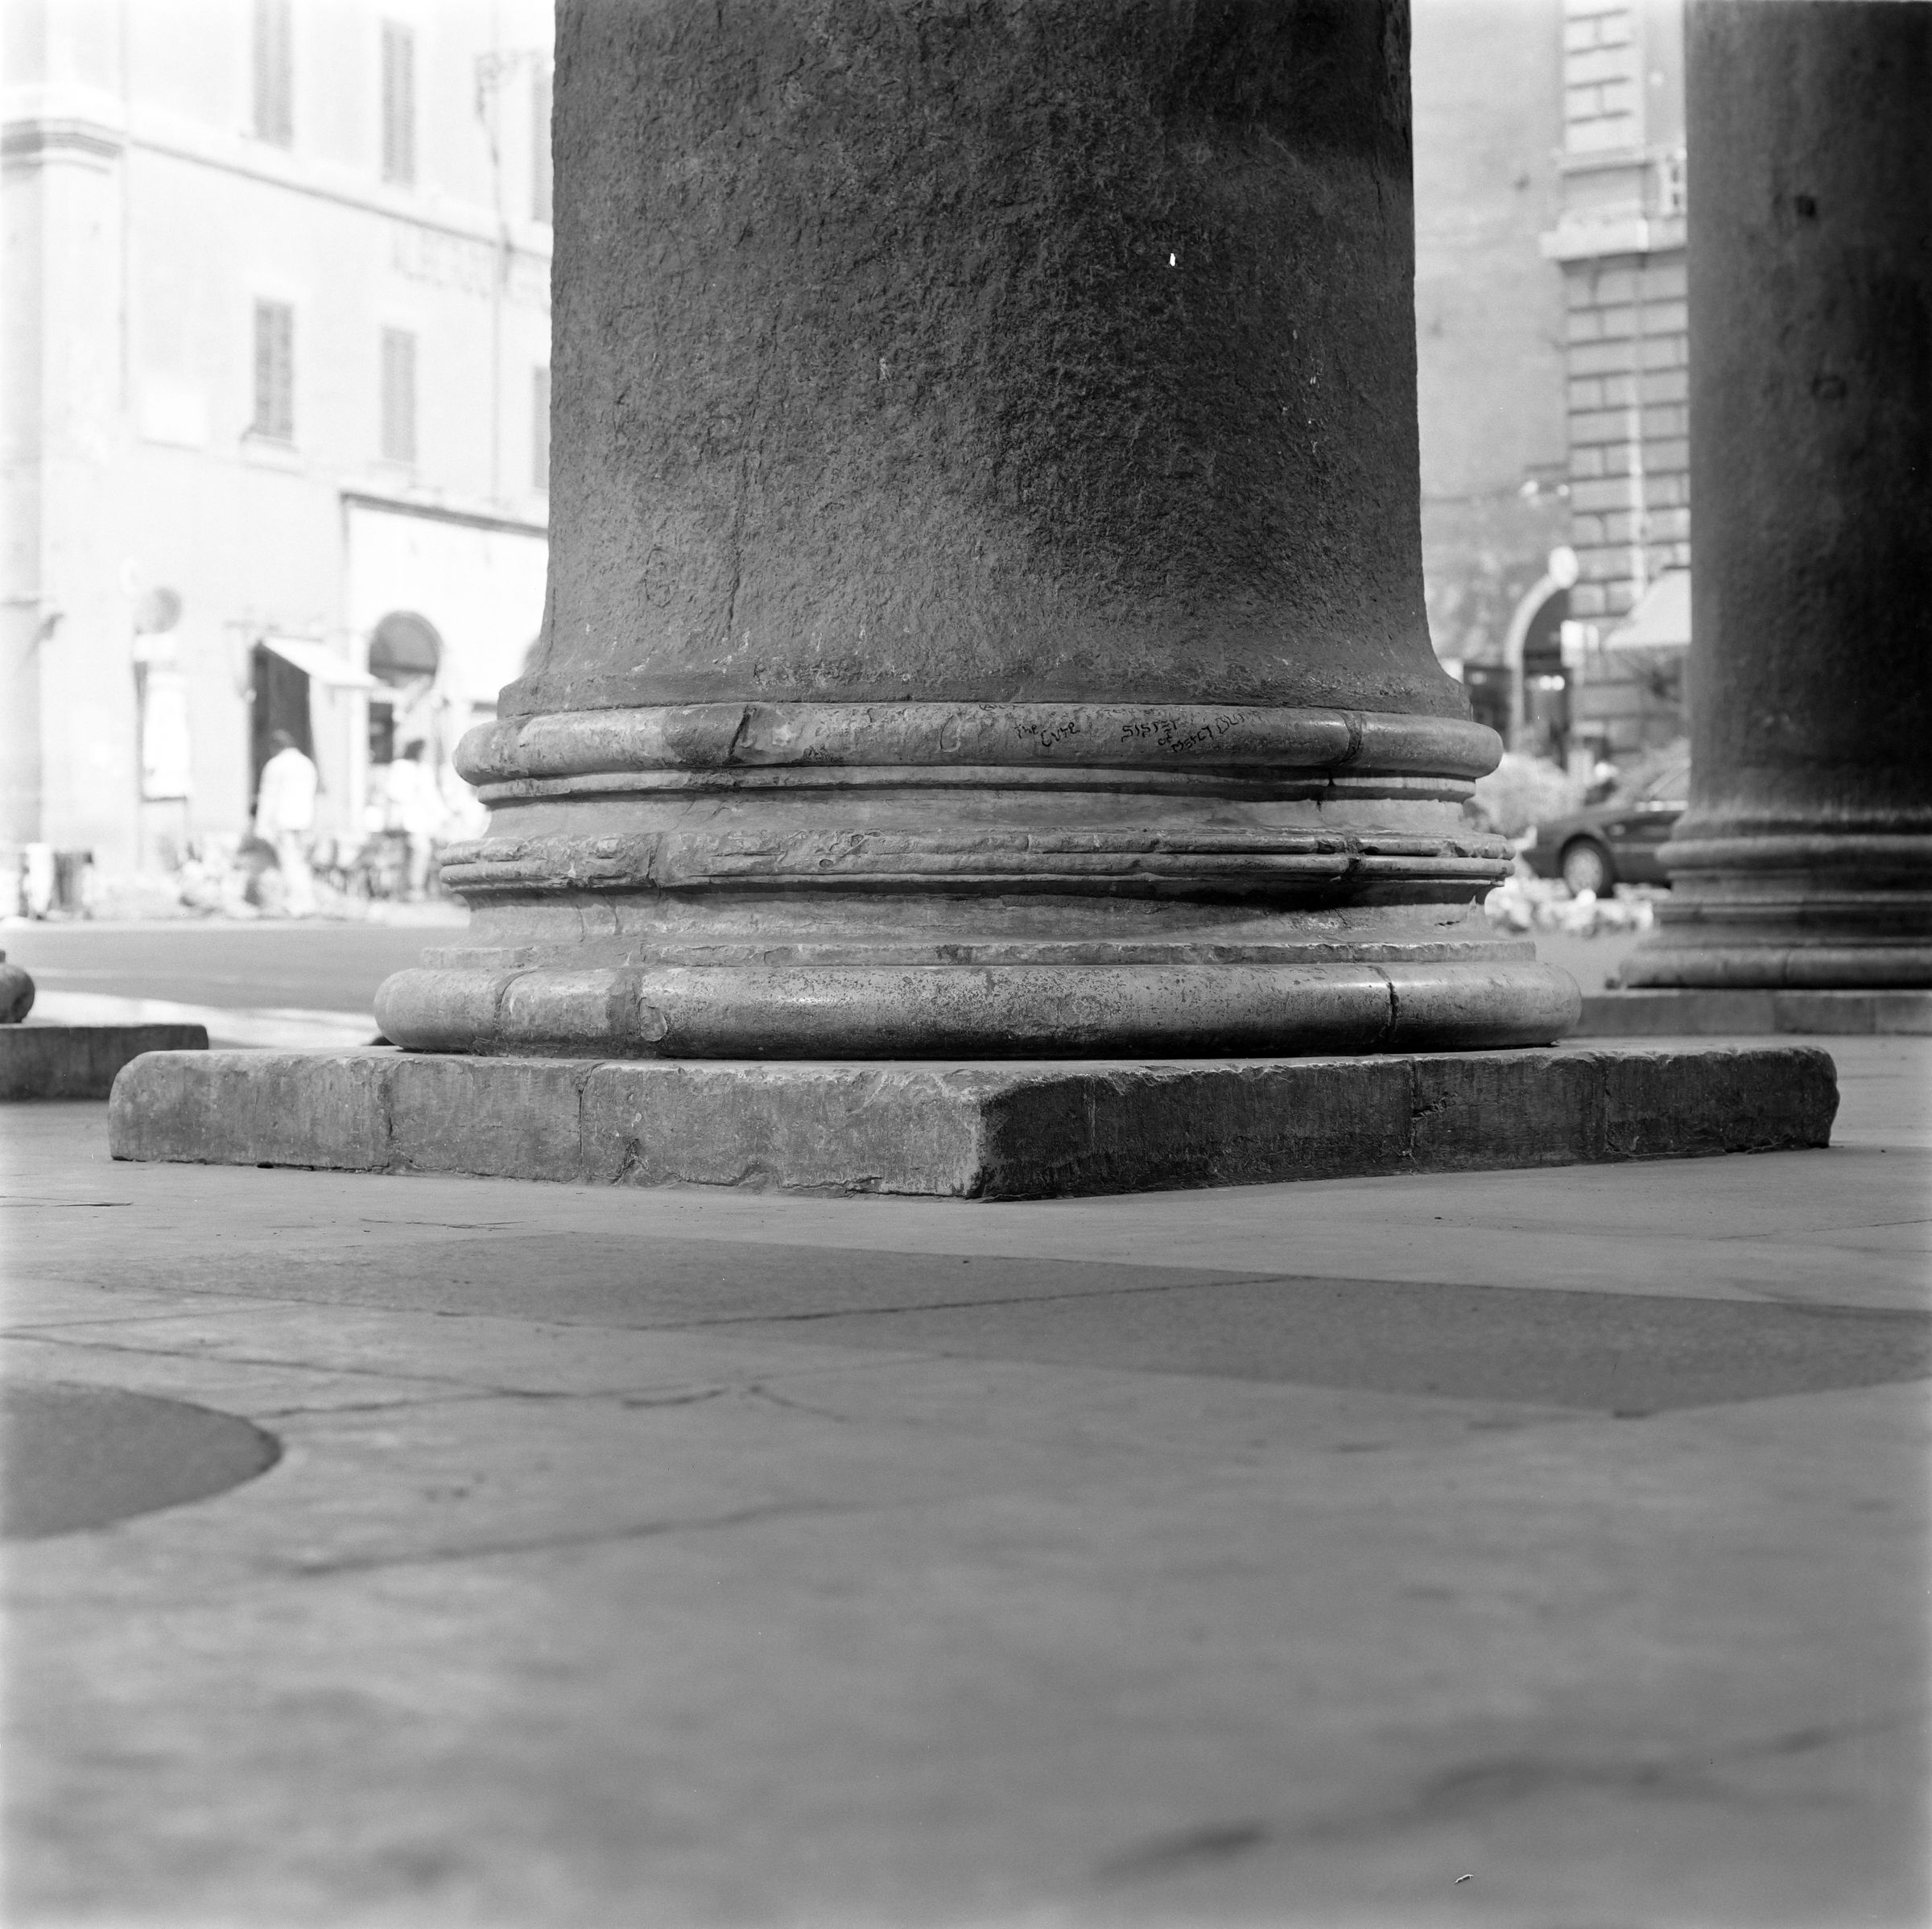 Fotografo non identificato, Pantheon,1951-2000, gelatina ai sali d'argento, 6x6 cm, N077966